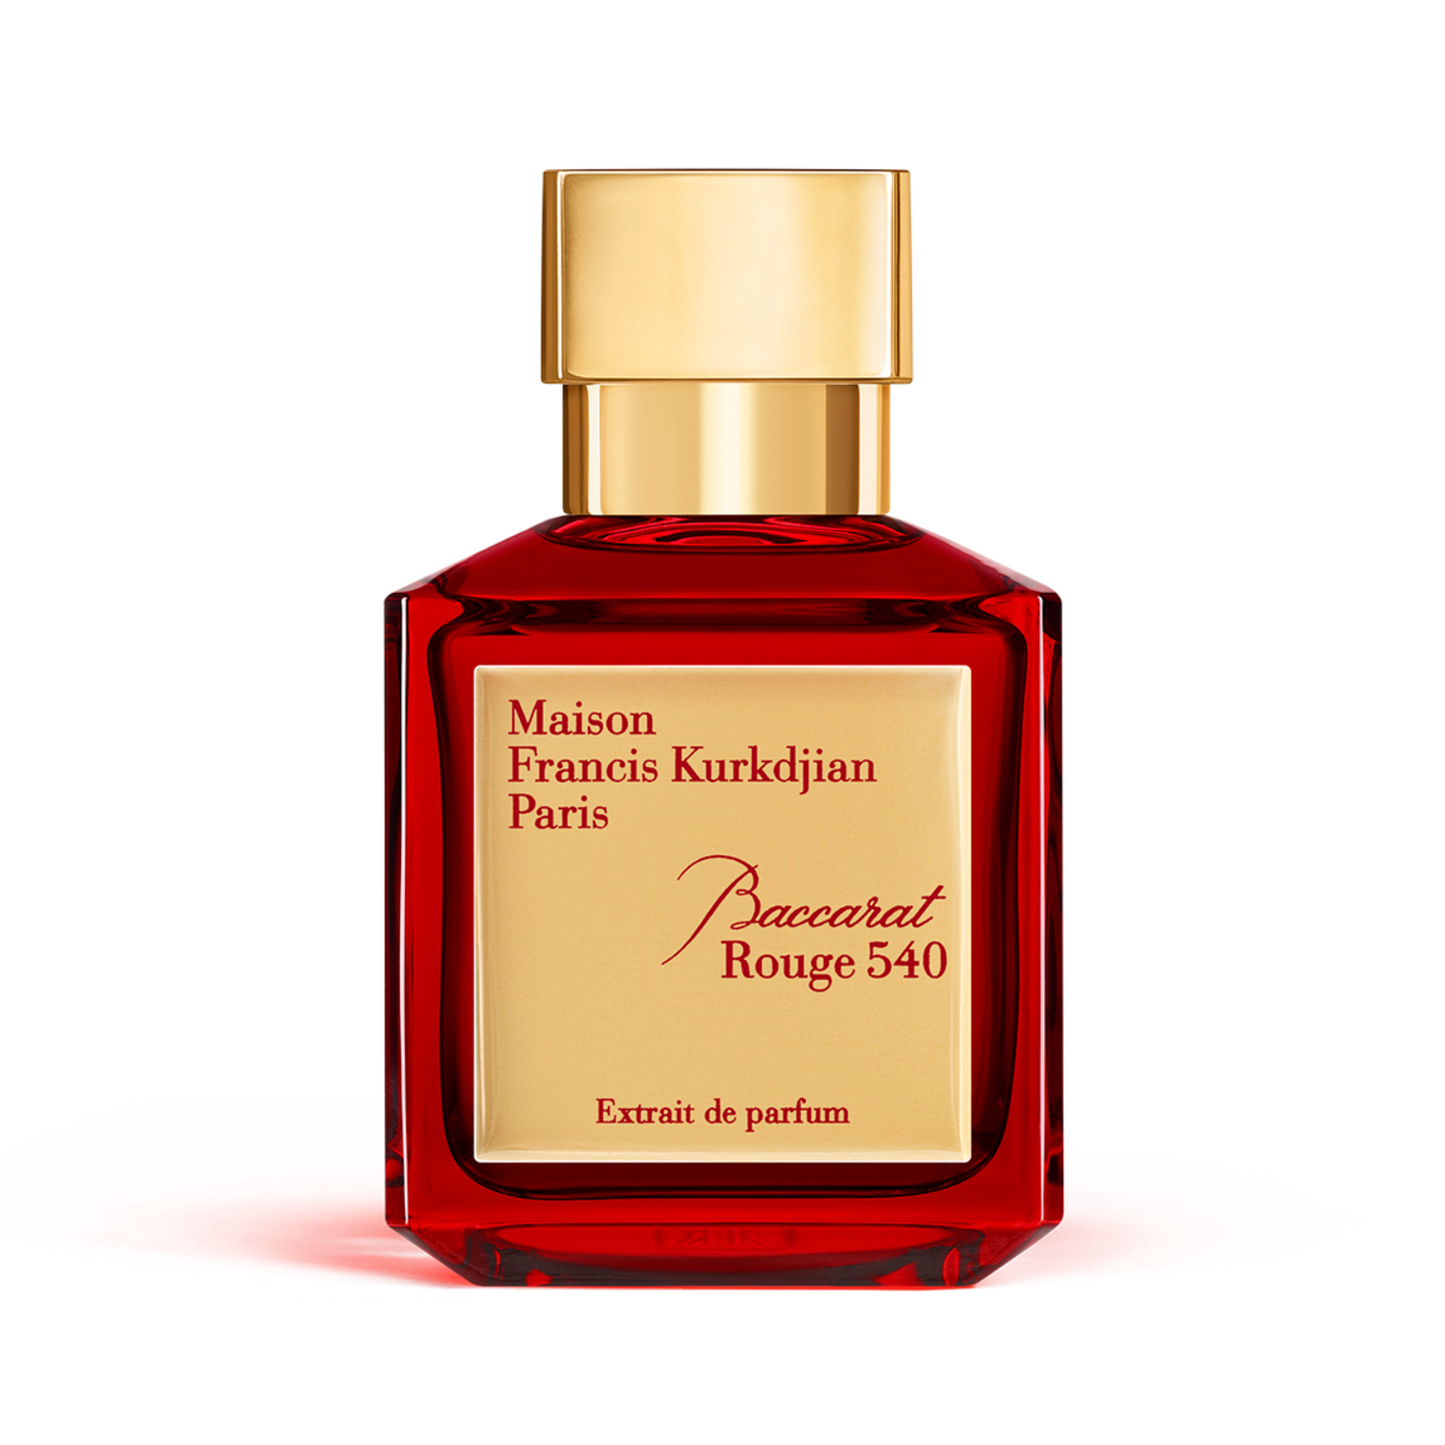 Primary Image of Baccarat Rouge 540 Extrait De Parfum